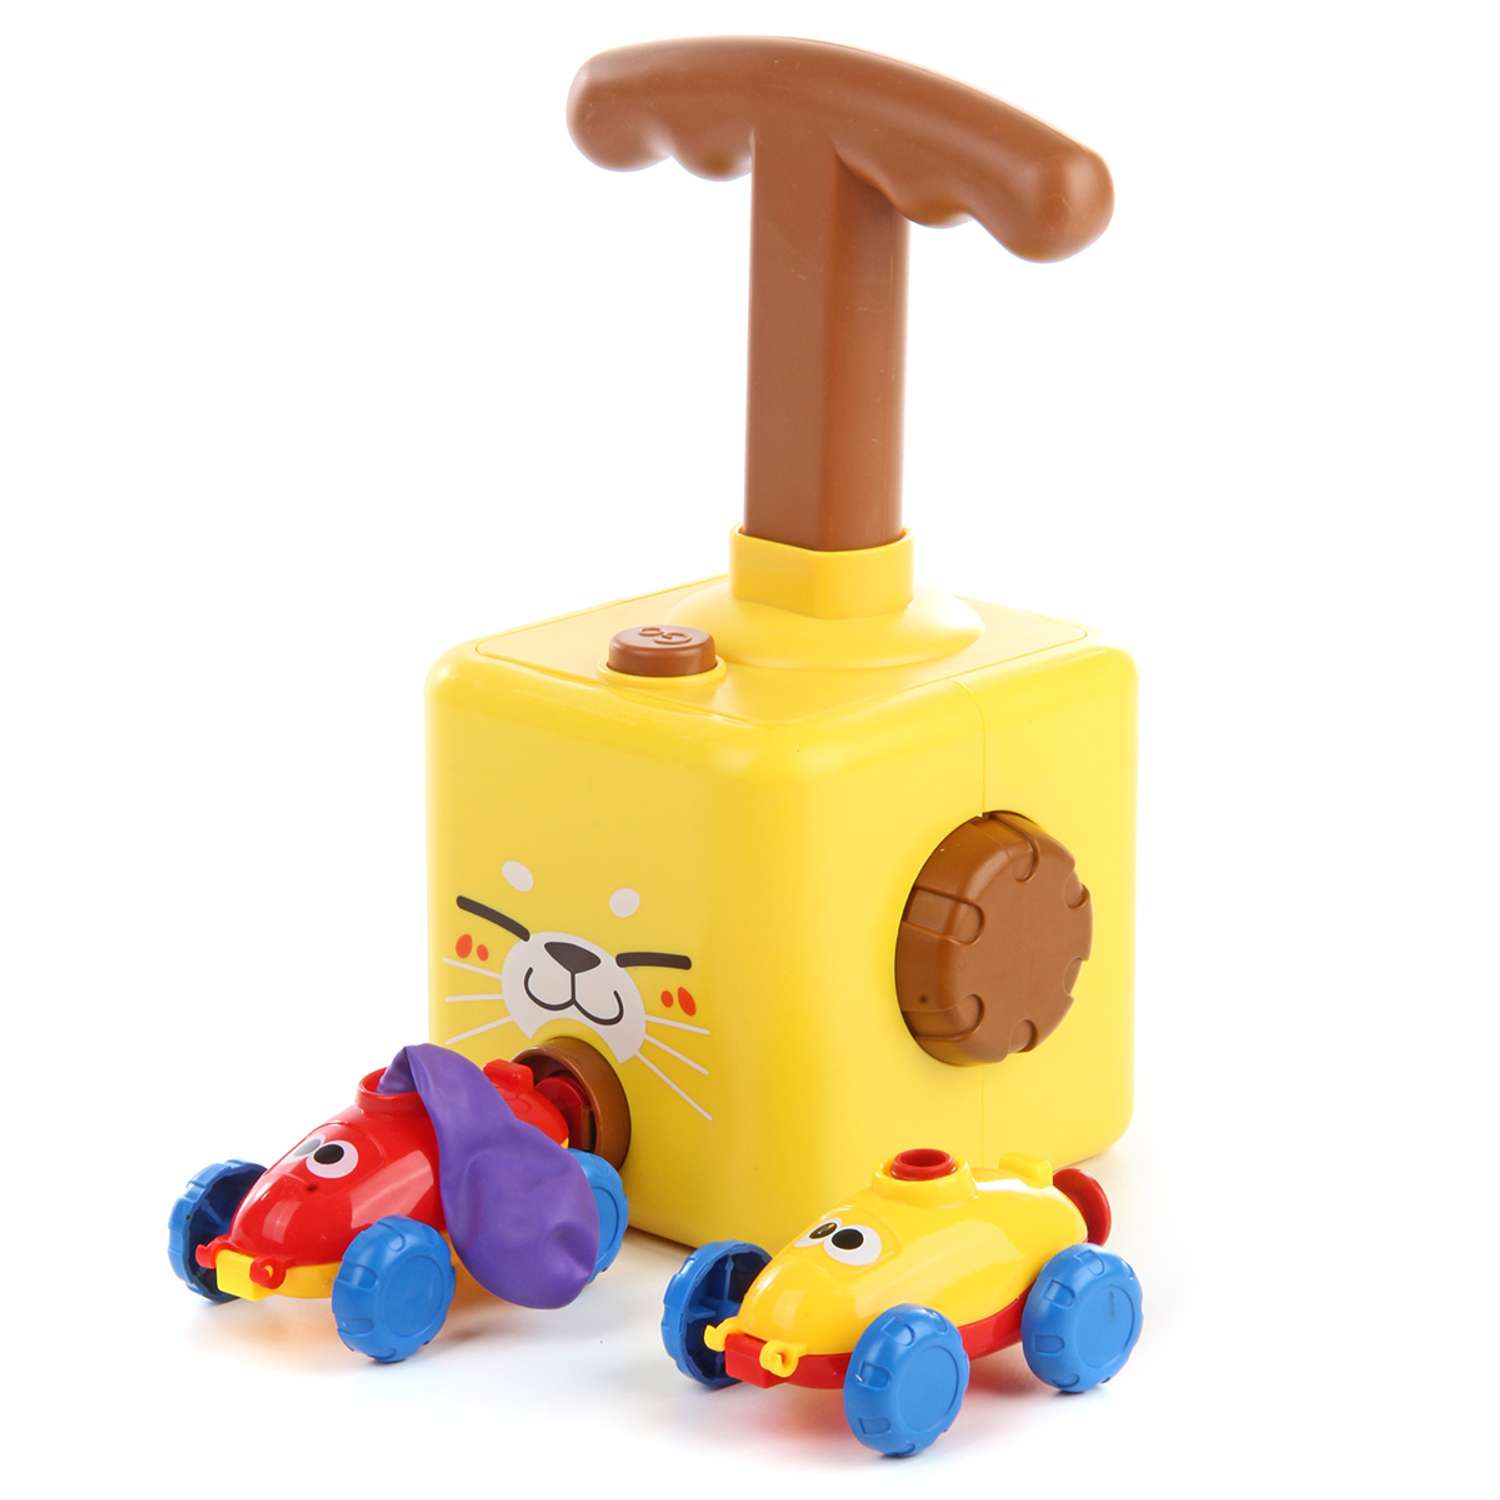 Машинка Ути Пути развивающая игрушка на воздушной тяге - фото 1